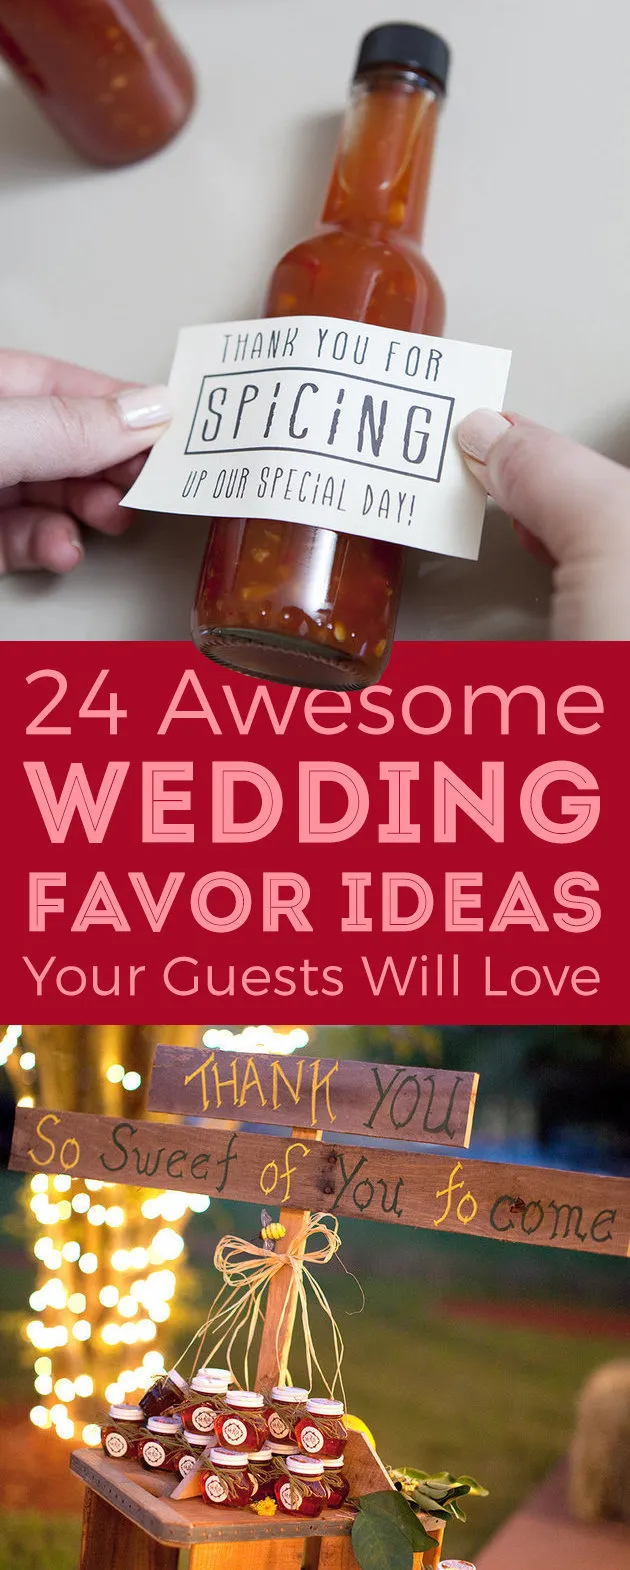 24 Wedding Favor Ideas That Don't Suck